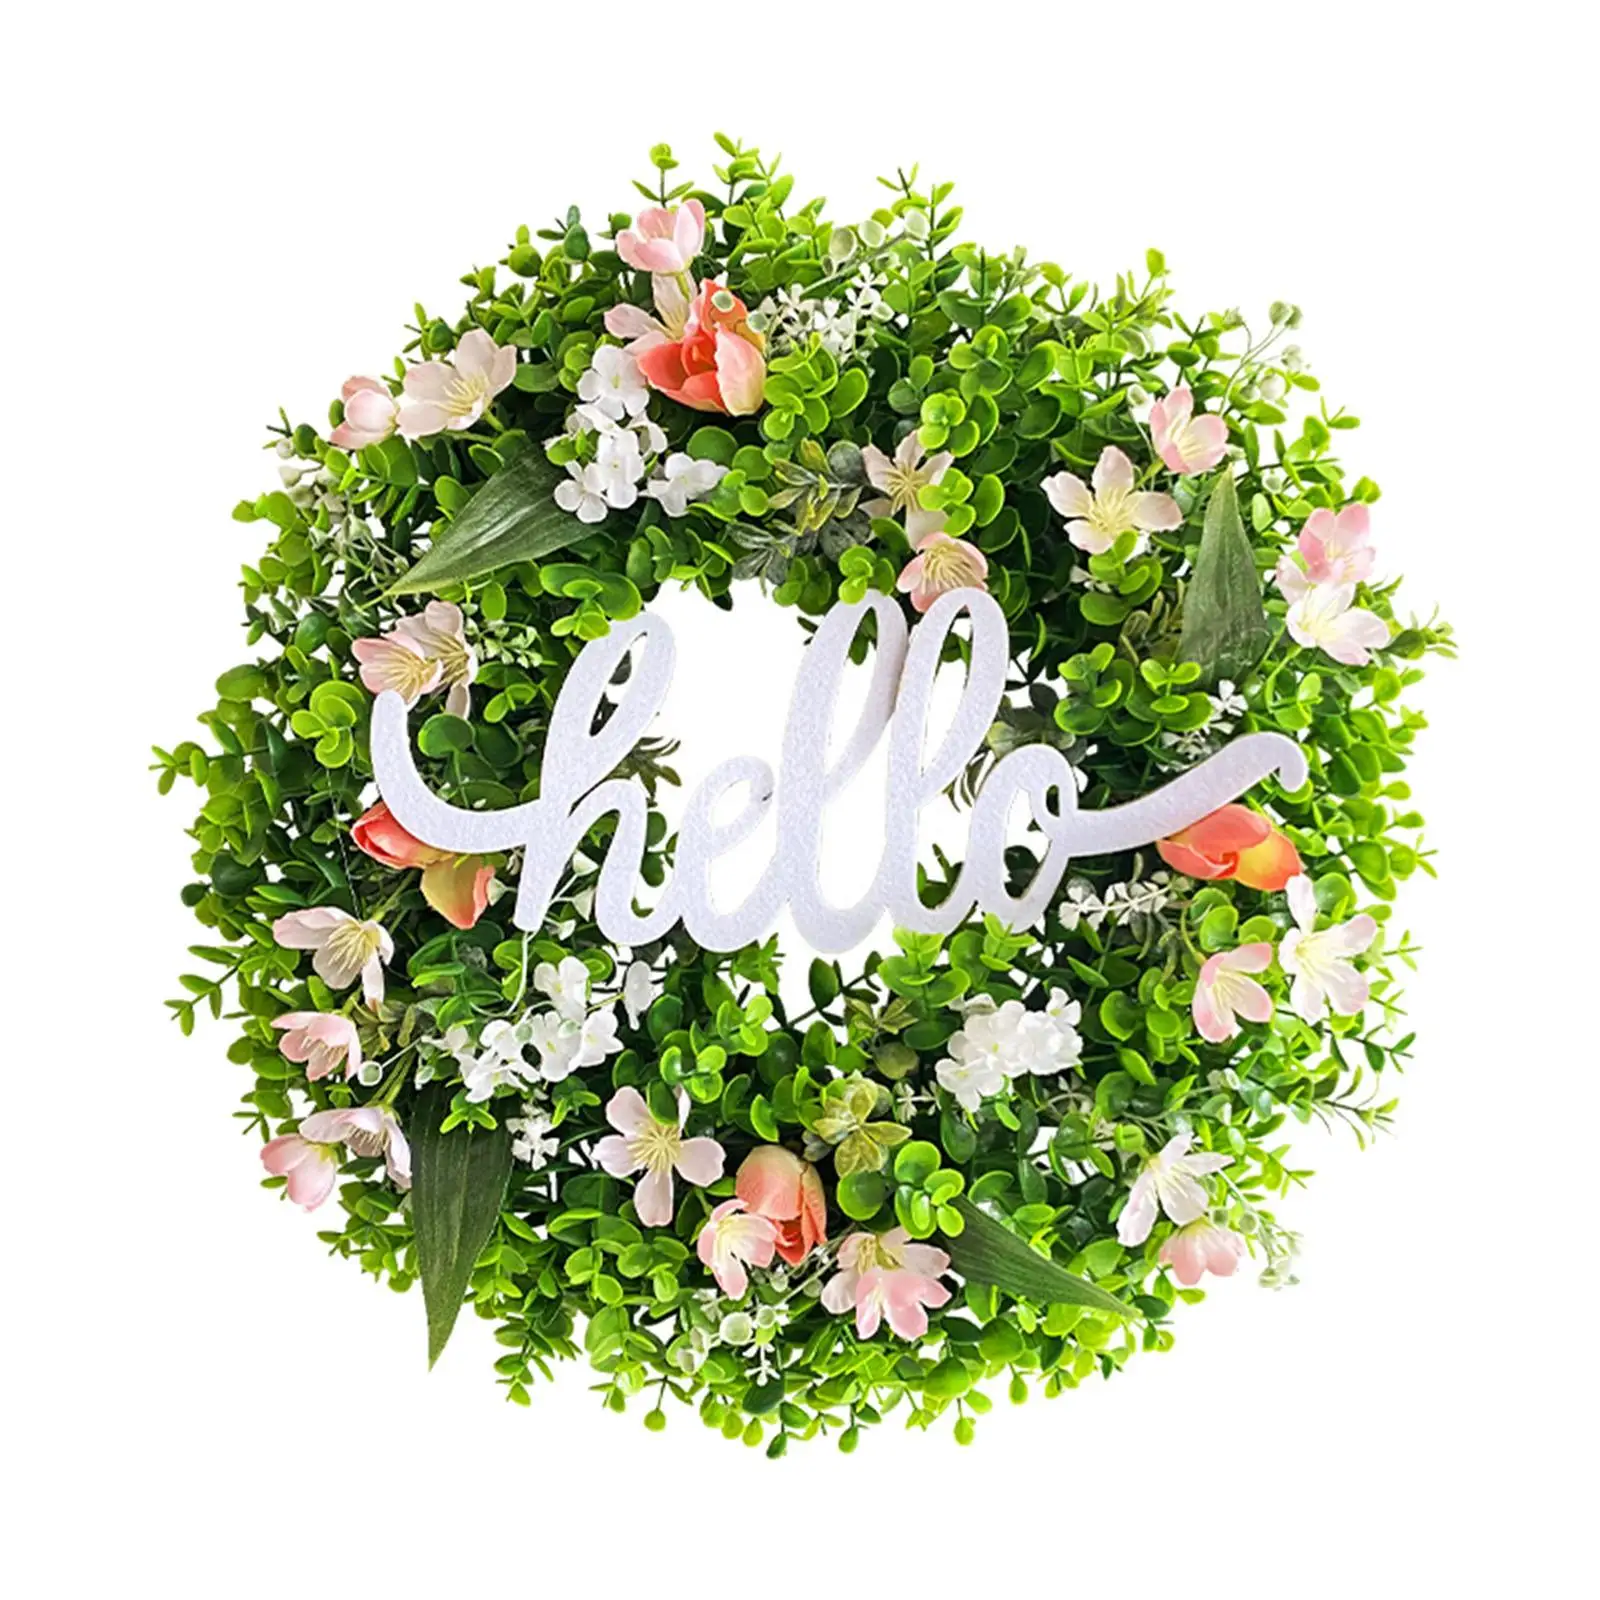 Spring Wreath Artificial Flower Wreath 45cm Decorative Hanging Decor Greenery Garland for Party Garden Celebration Festival